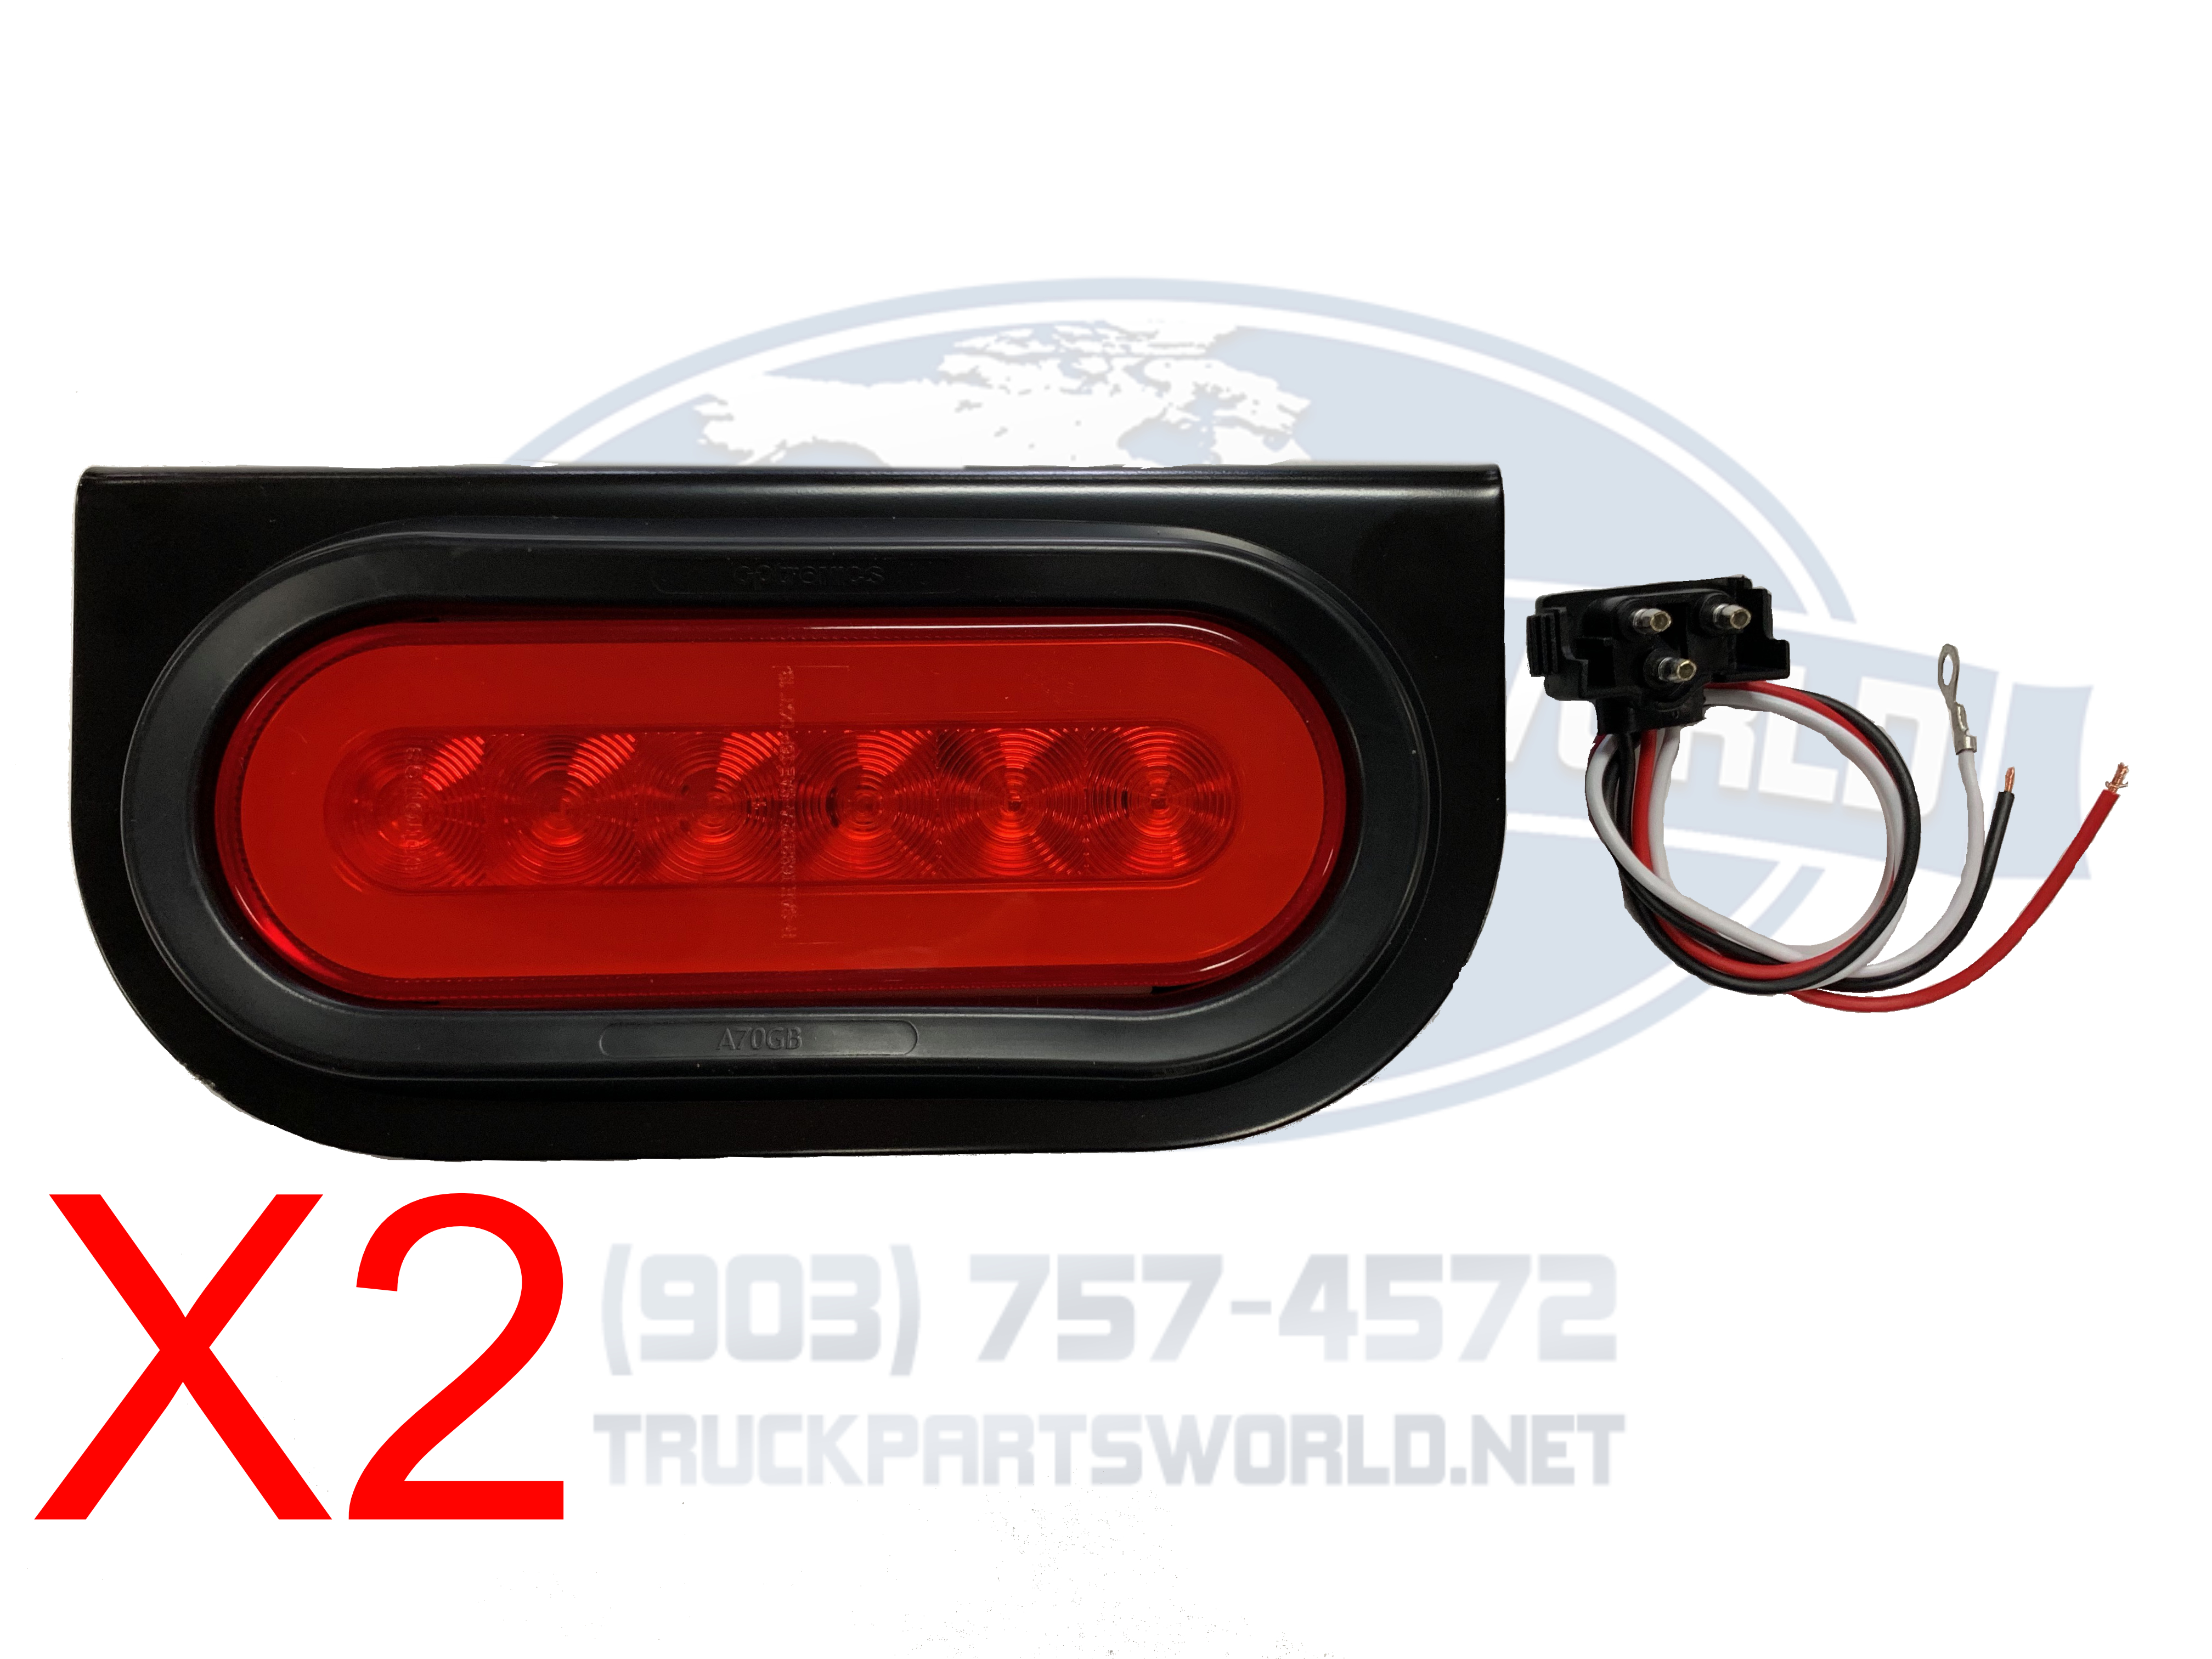 22 LED Audew 2Pcs 6-inch Oval 22-LED Trailer Tail Lights Red Brakes/Marker Lights for Truck,Boat,Trailer,Bus,IP65 Waterproof,DC 12V 